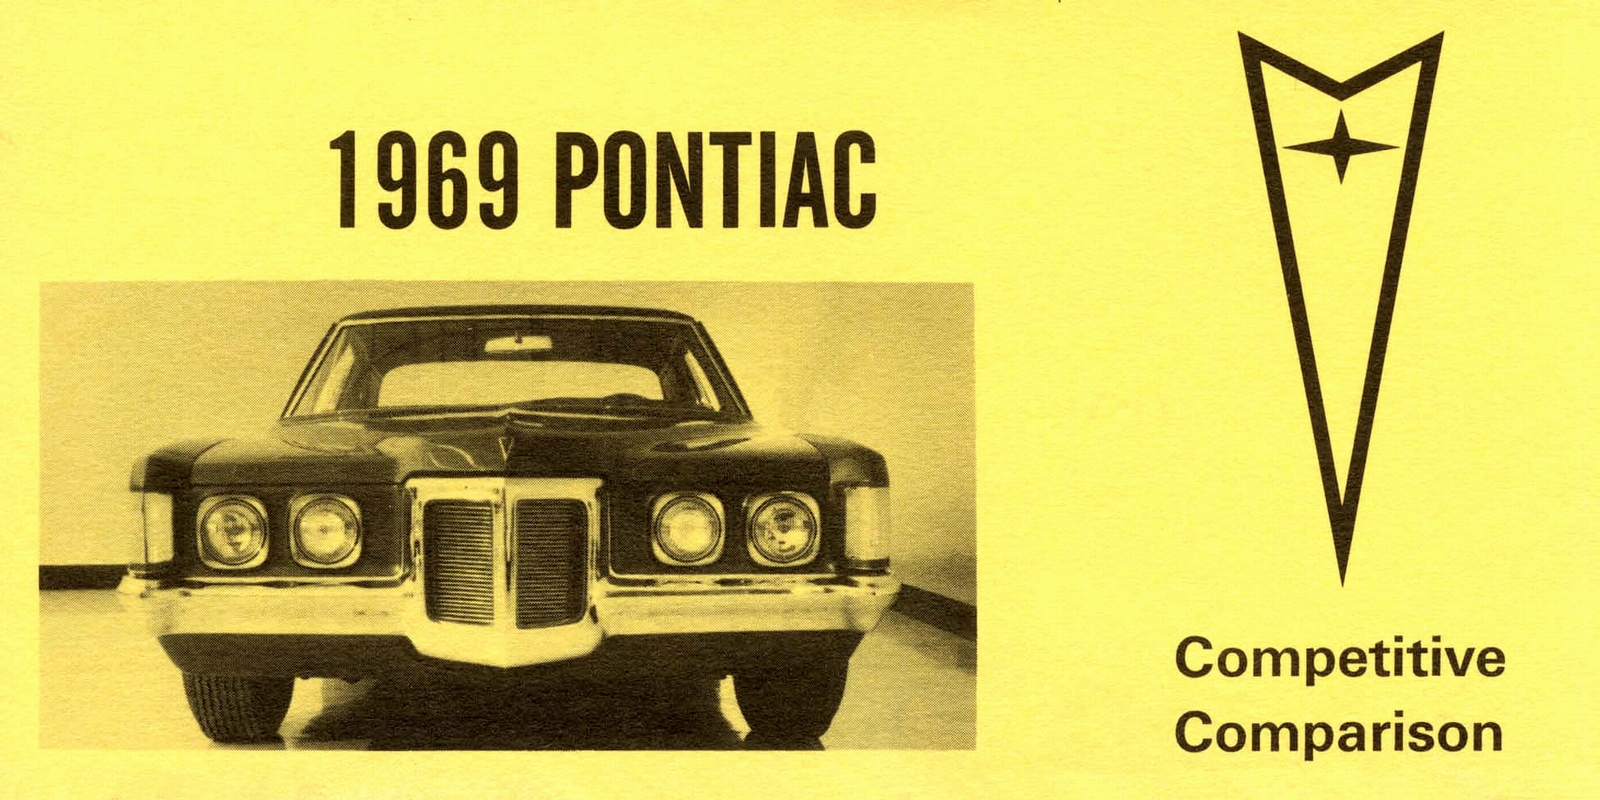 n_1969 Pontiac Competitive Comparison-01.jpg